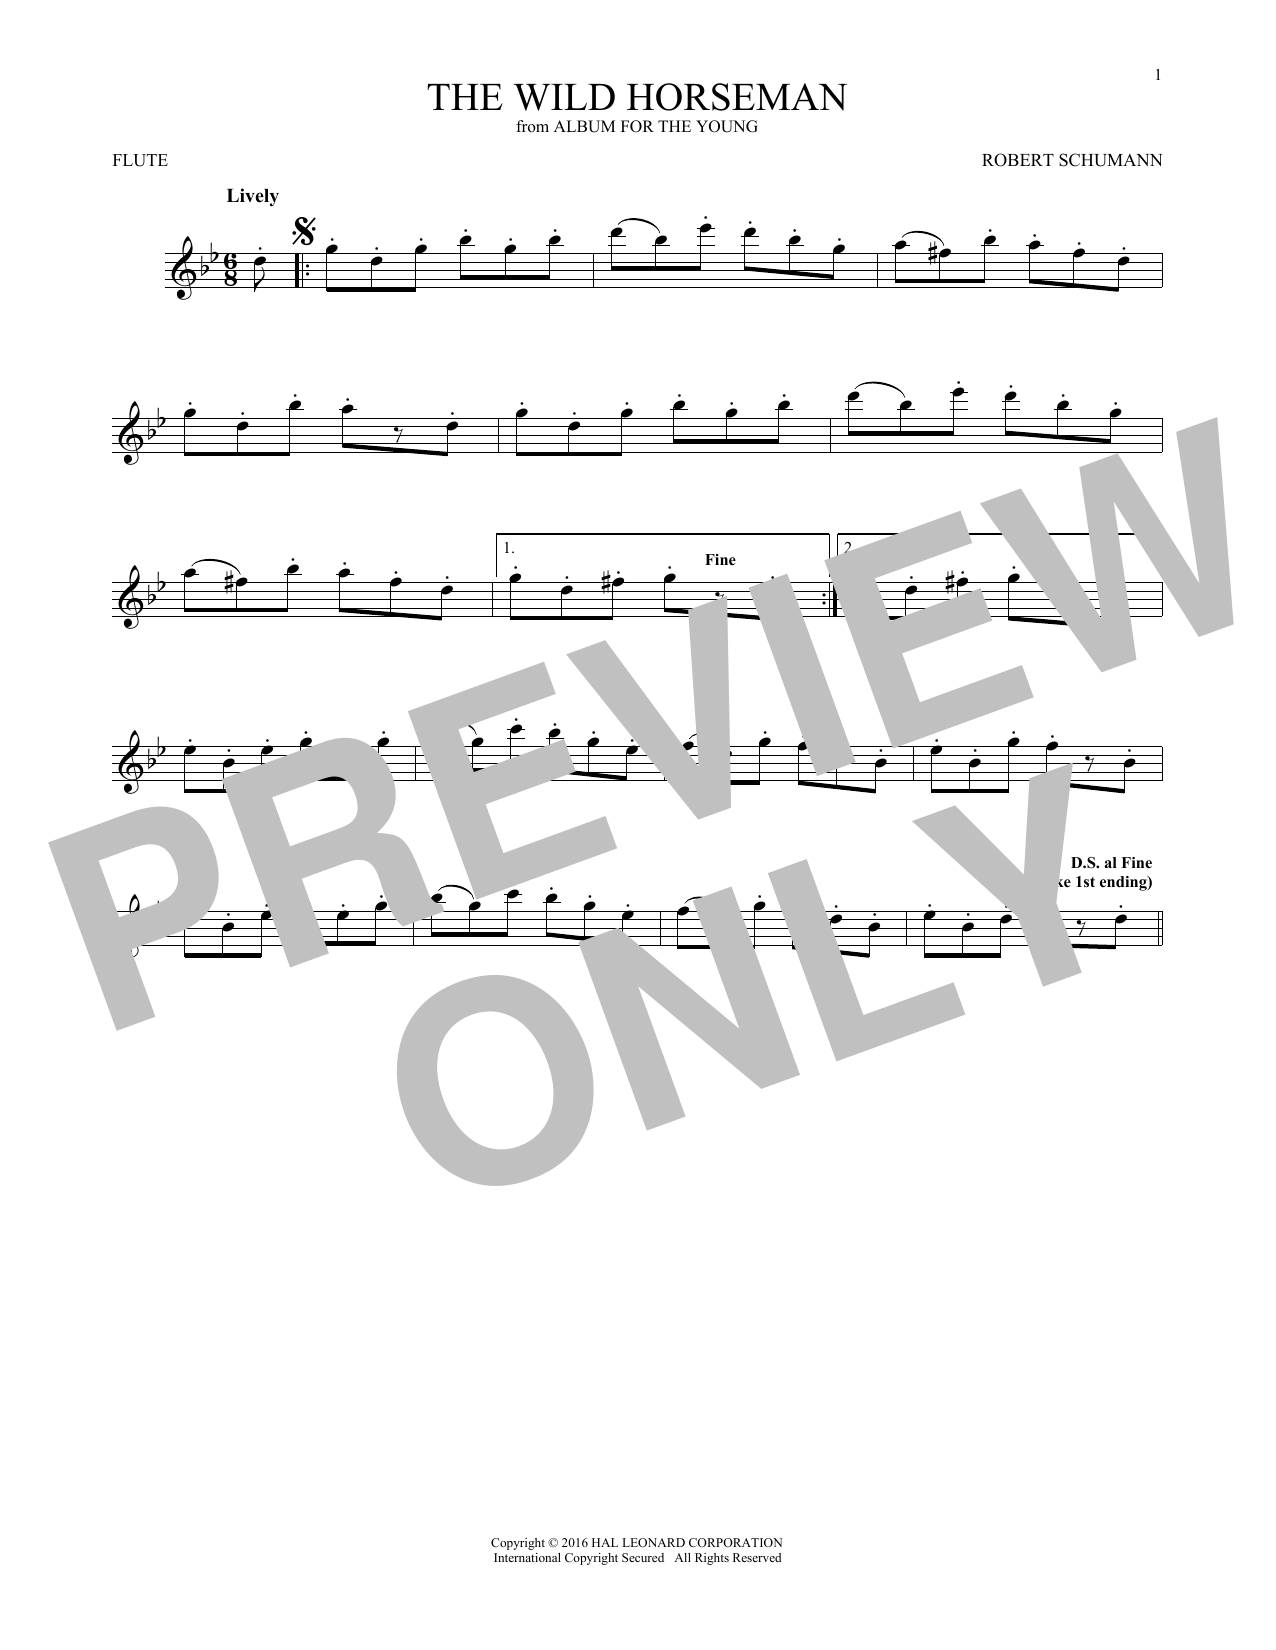 Robert Schumann The Wild Horseman (Wilder Reiter), Op. 68, No. 8 Sheet Music Notes & Chords for Clarinet - Download or Print PDF